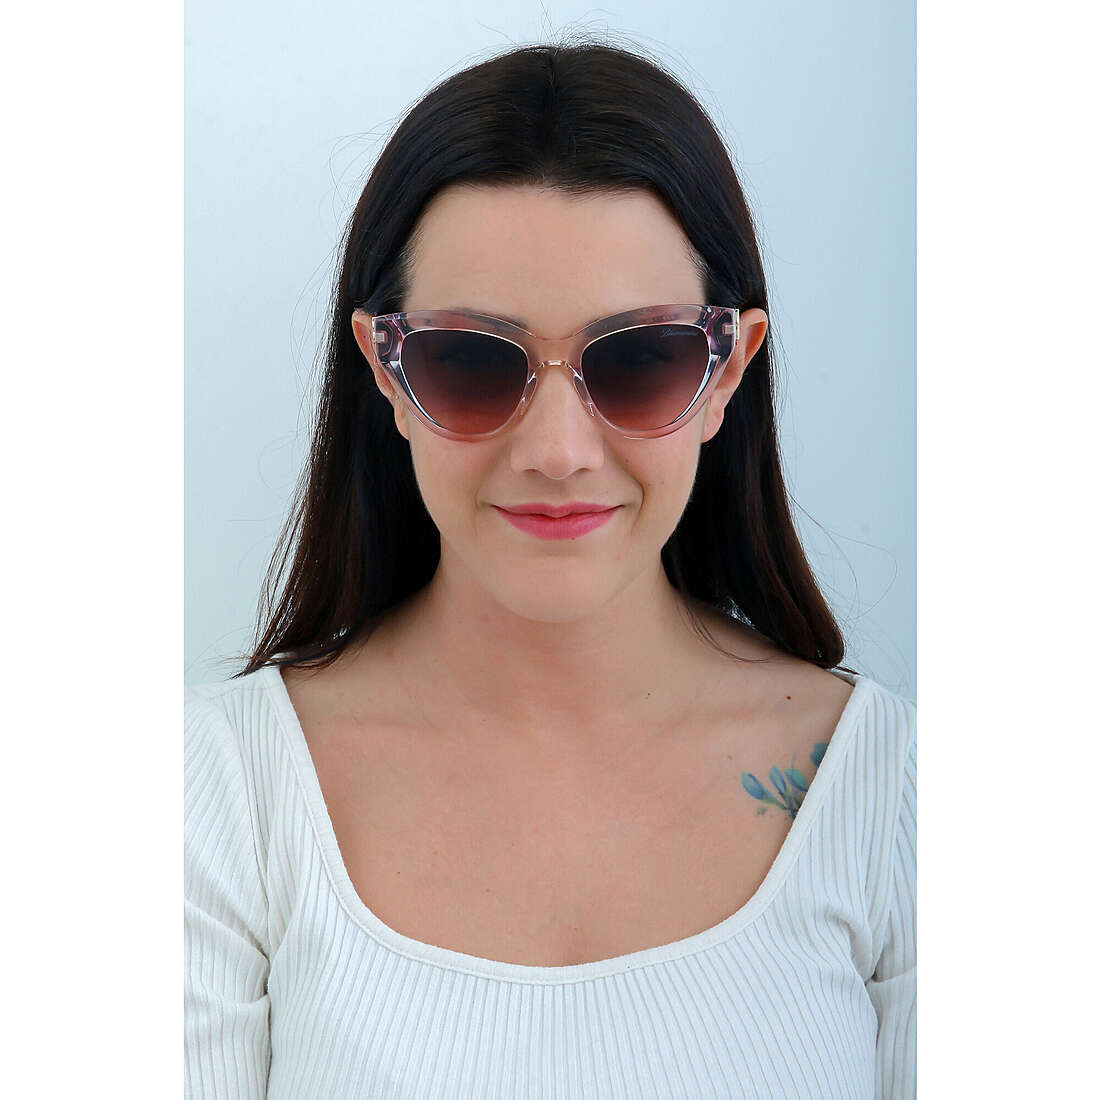 Blumarine occhiali da sole donna SBM8280U61 indosso